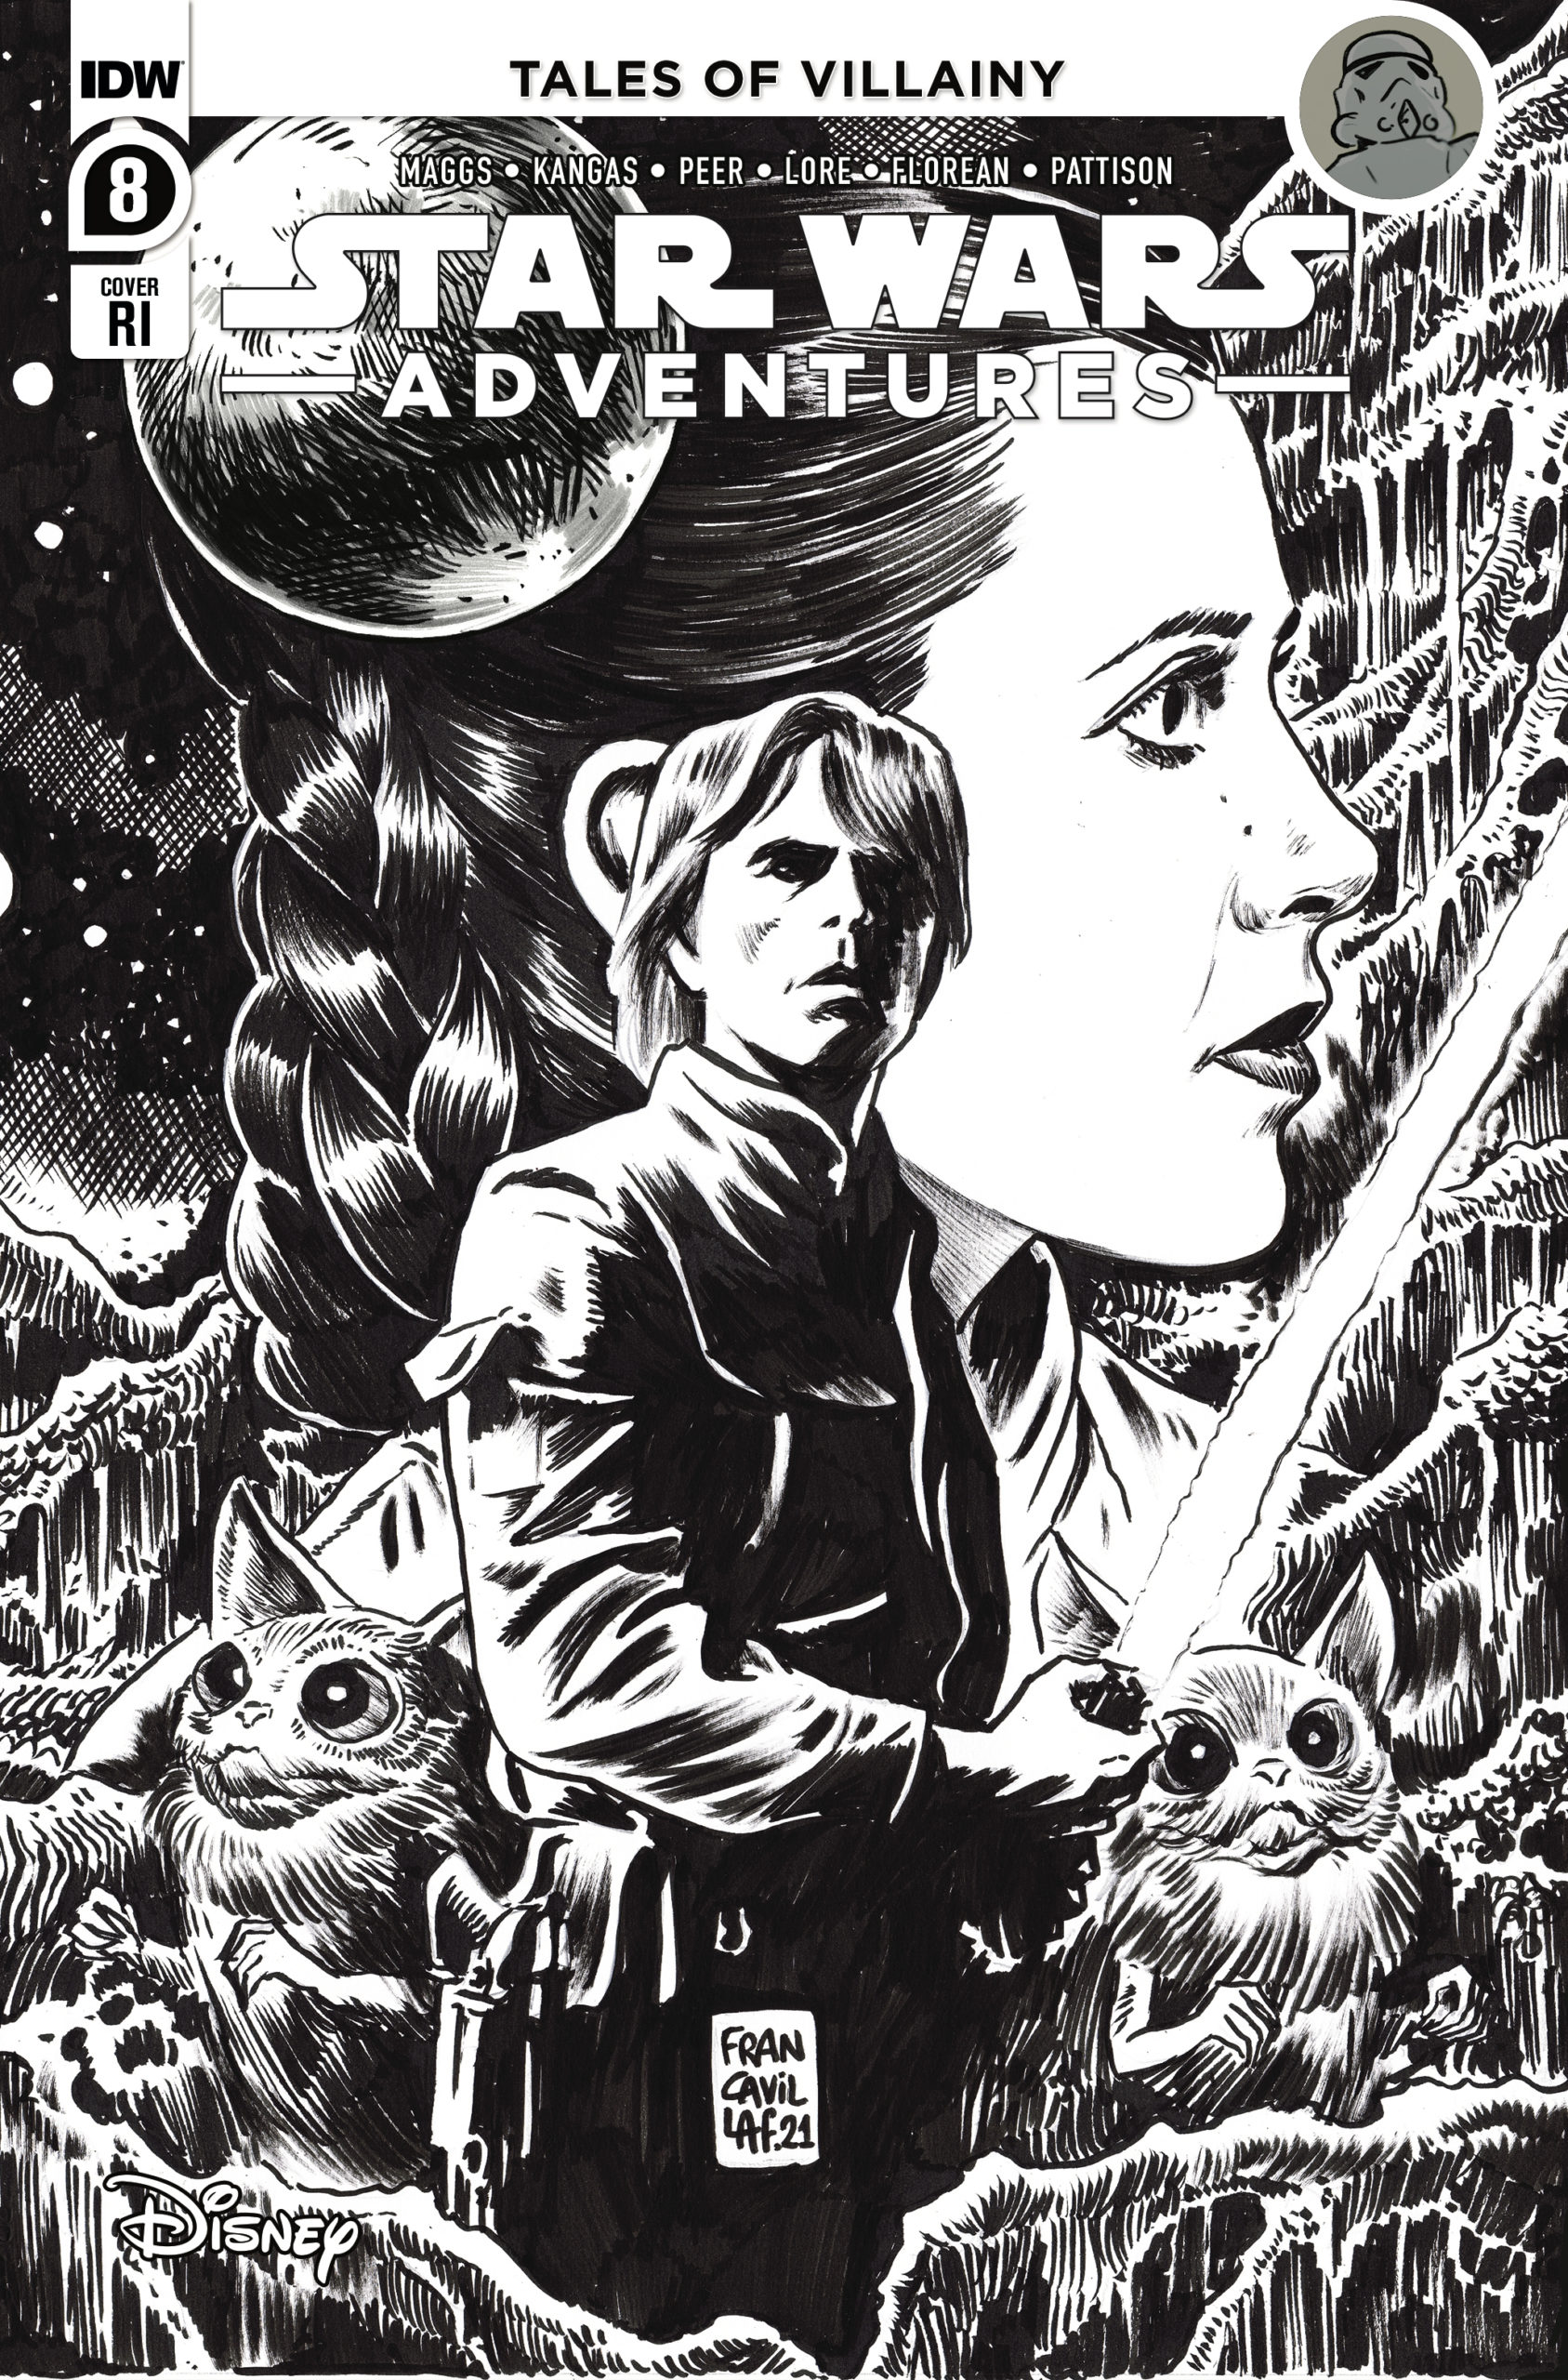 Star Wars Adventures #8 (Francesco Francavilla Black & White Variant Cover) (18.08.2021)